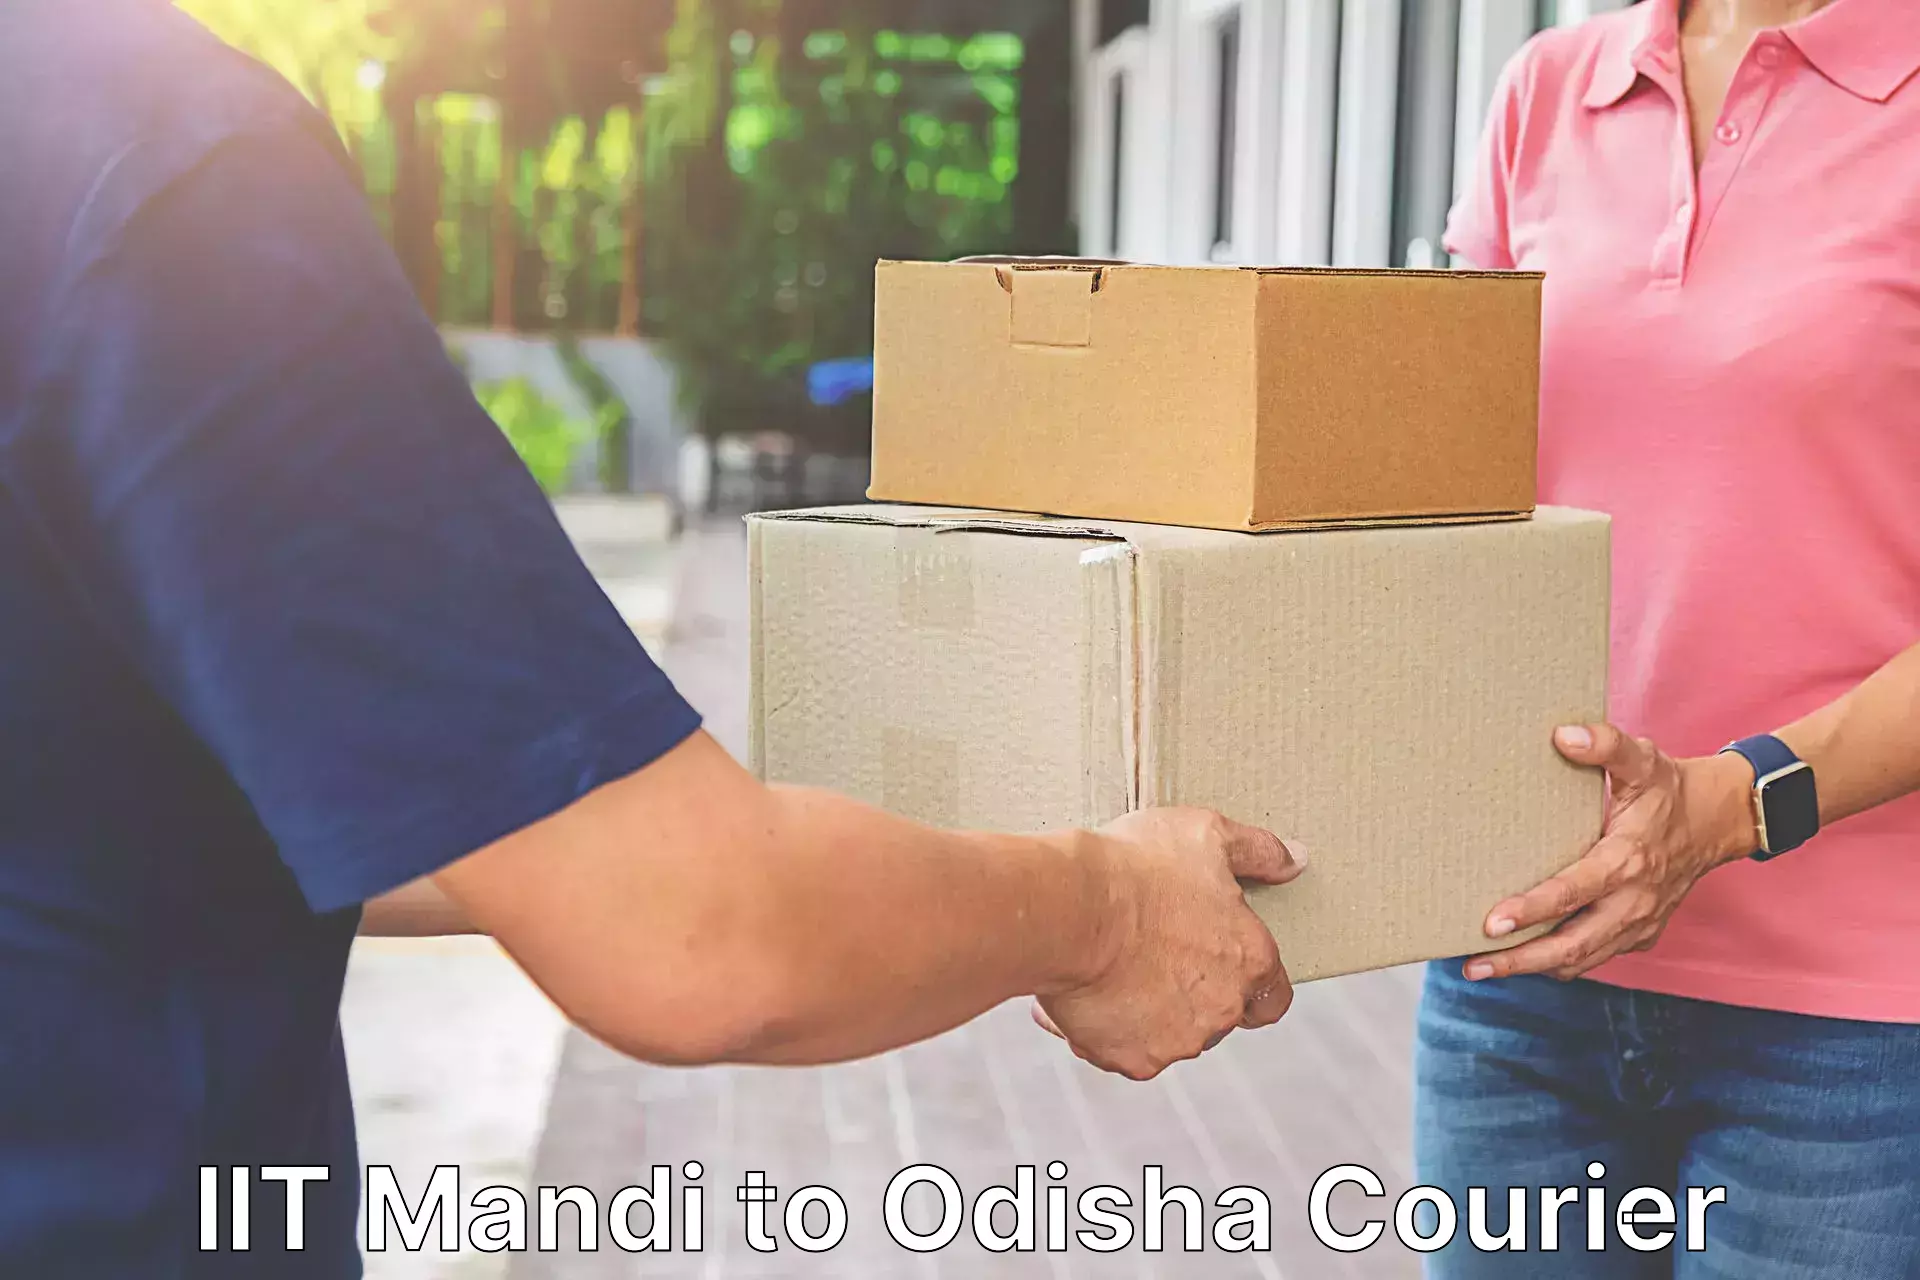 User-friendly delivery service IIT Mandi to Chikiti